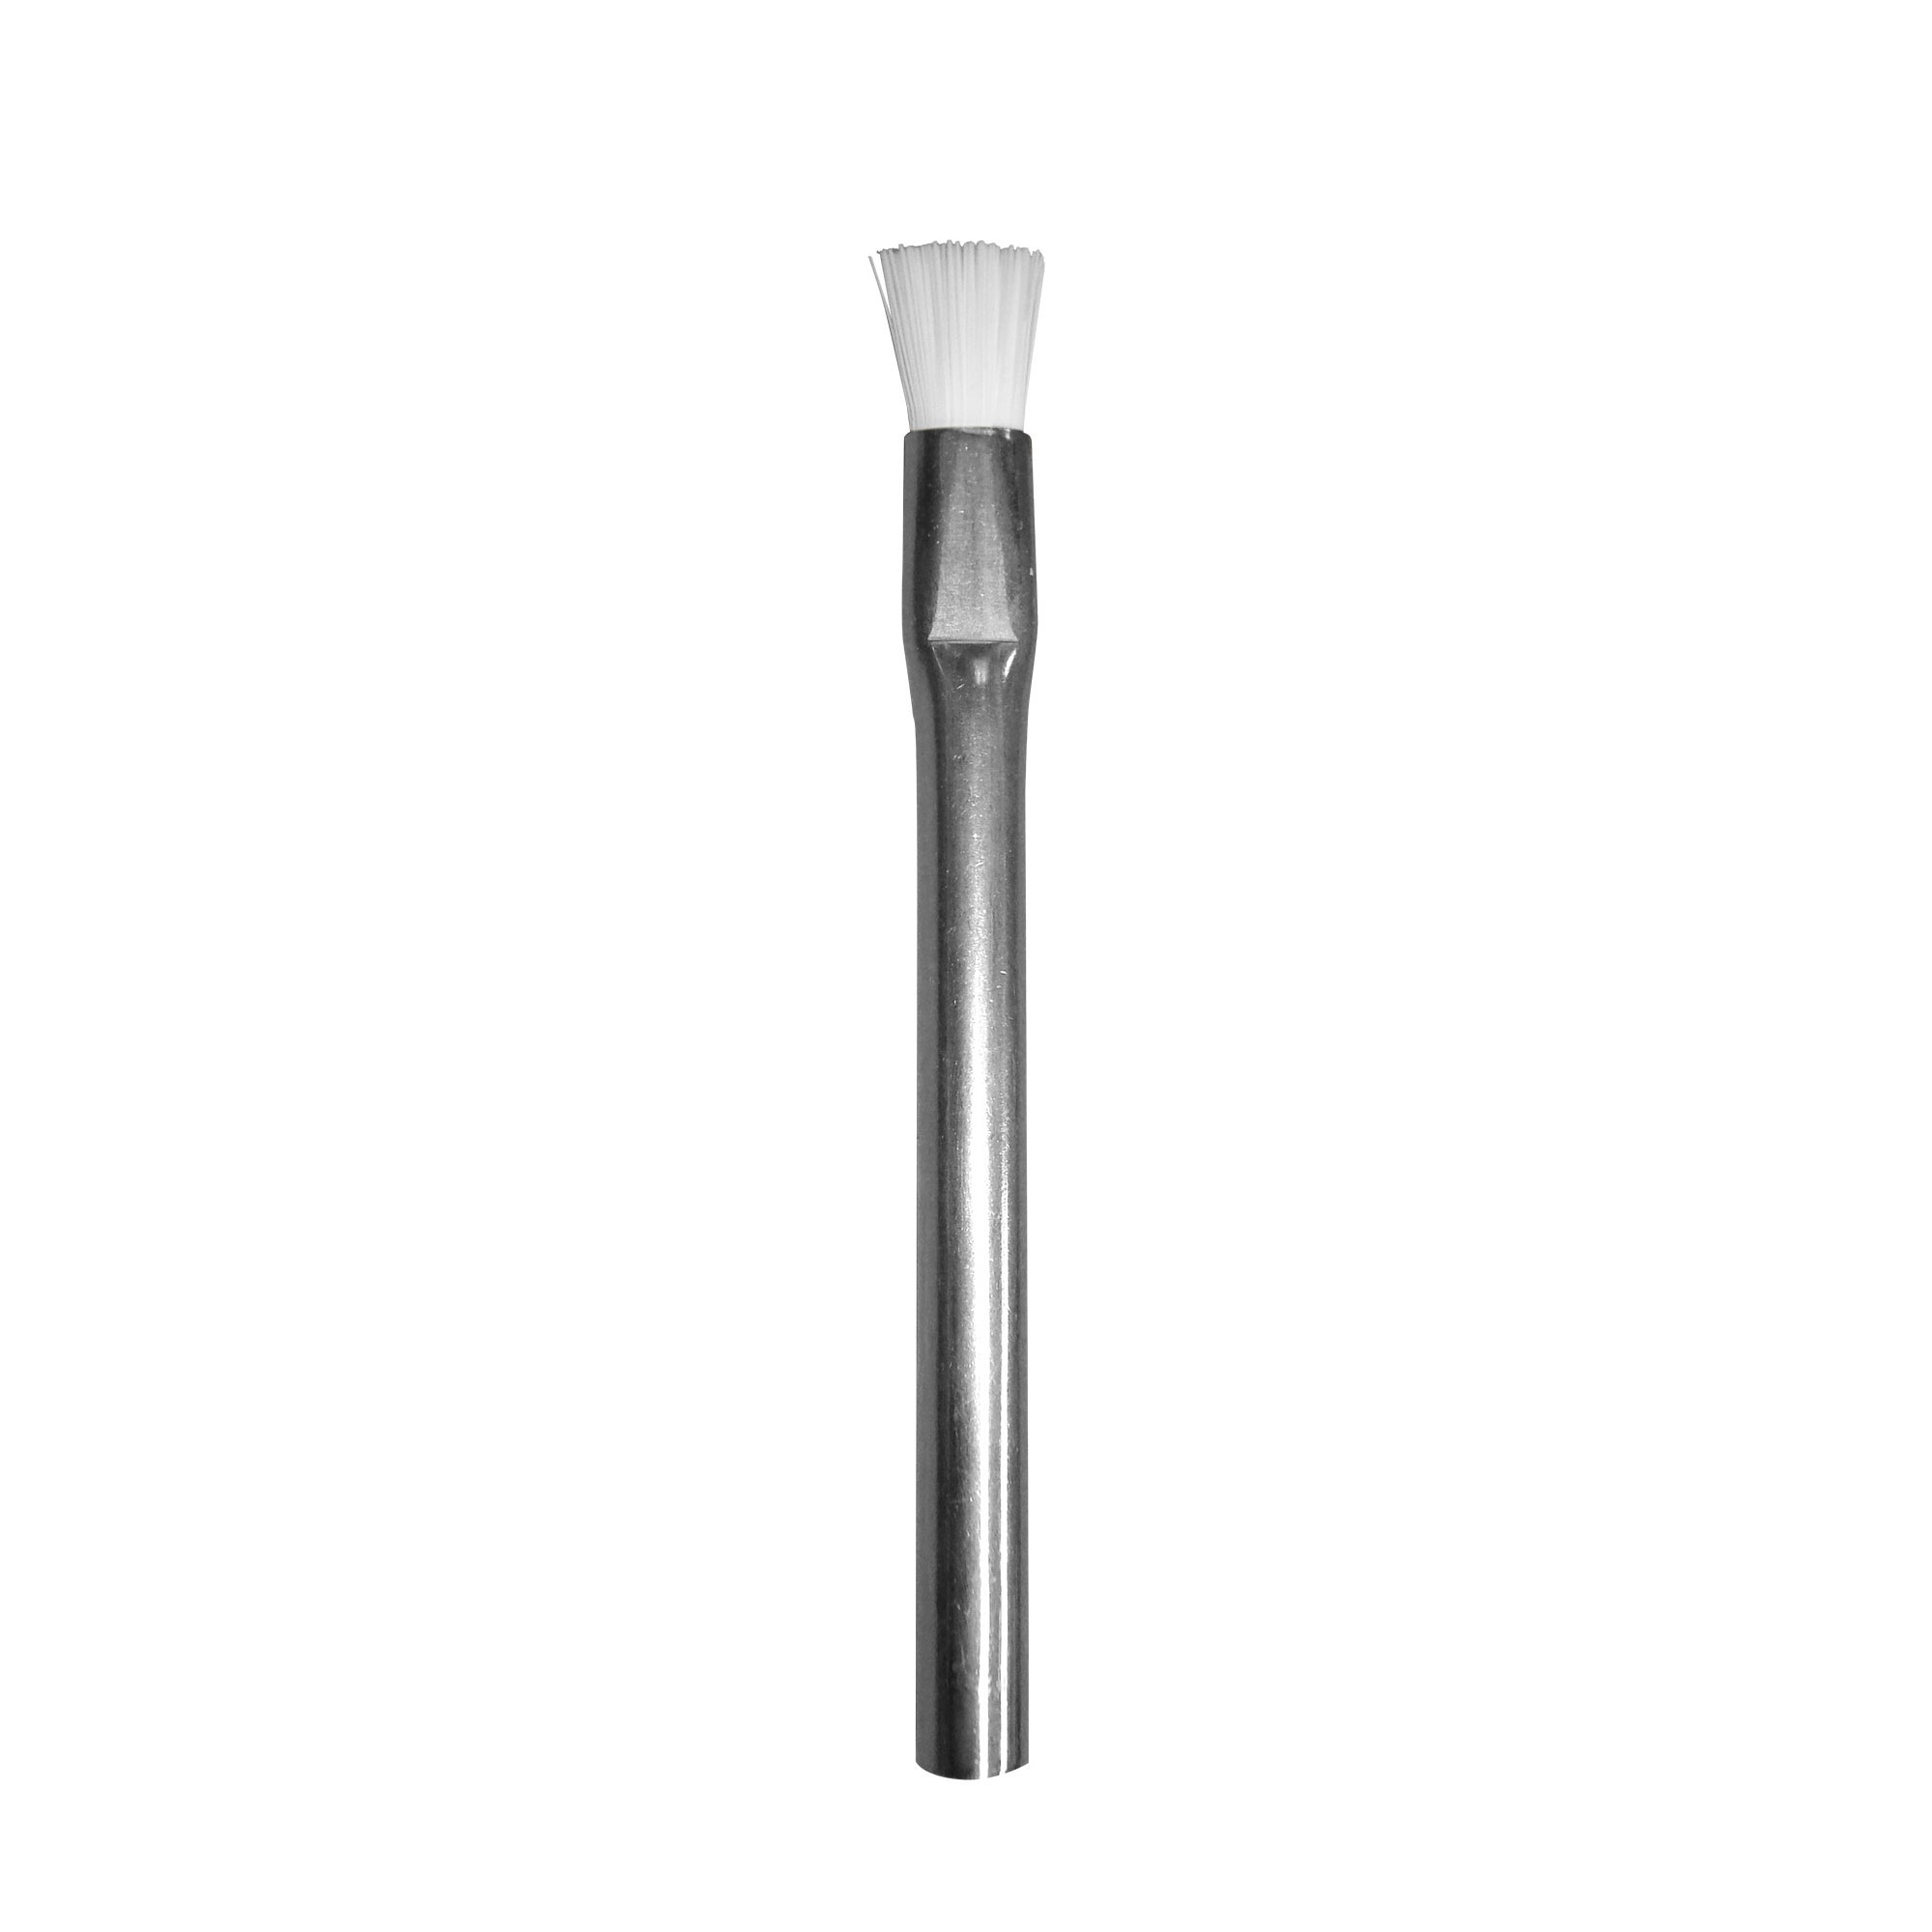 Applicator Brush — 0.011" PTFE Bristle / 5/16" Diameter Stainless Steel Tube Handle